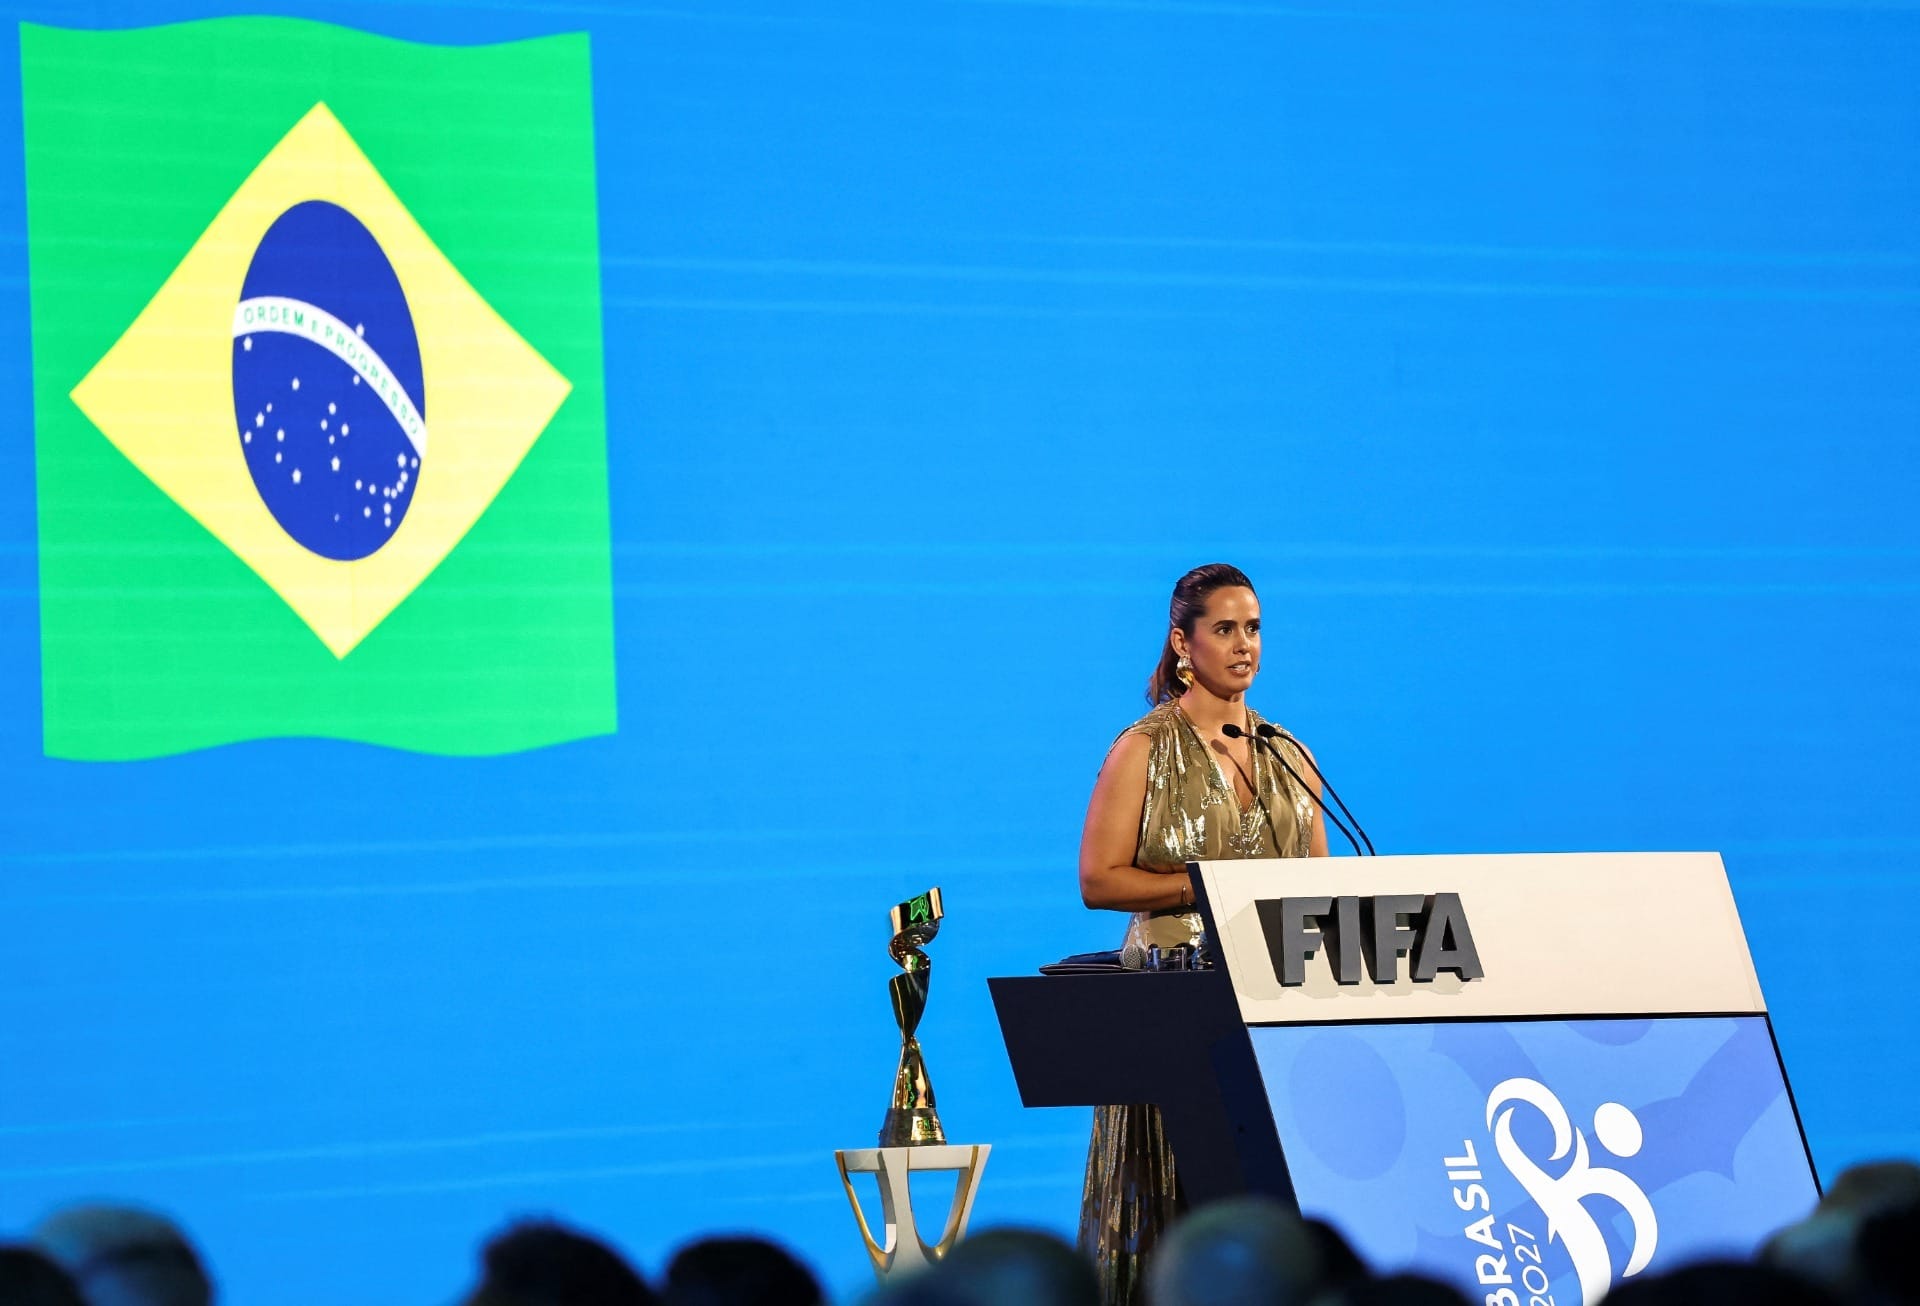 Brasil é escolhido como país-sede da Copa do Mundo feminina de 2027